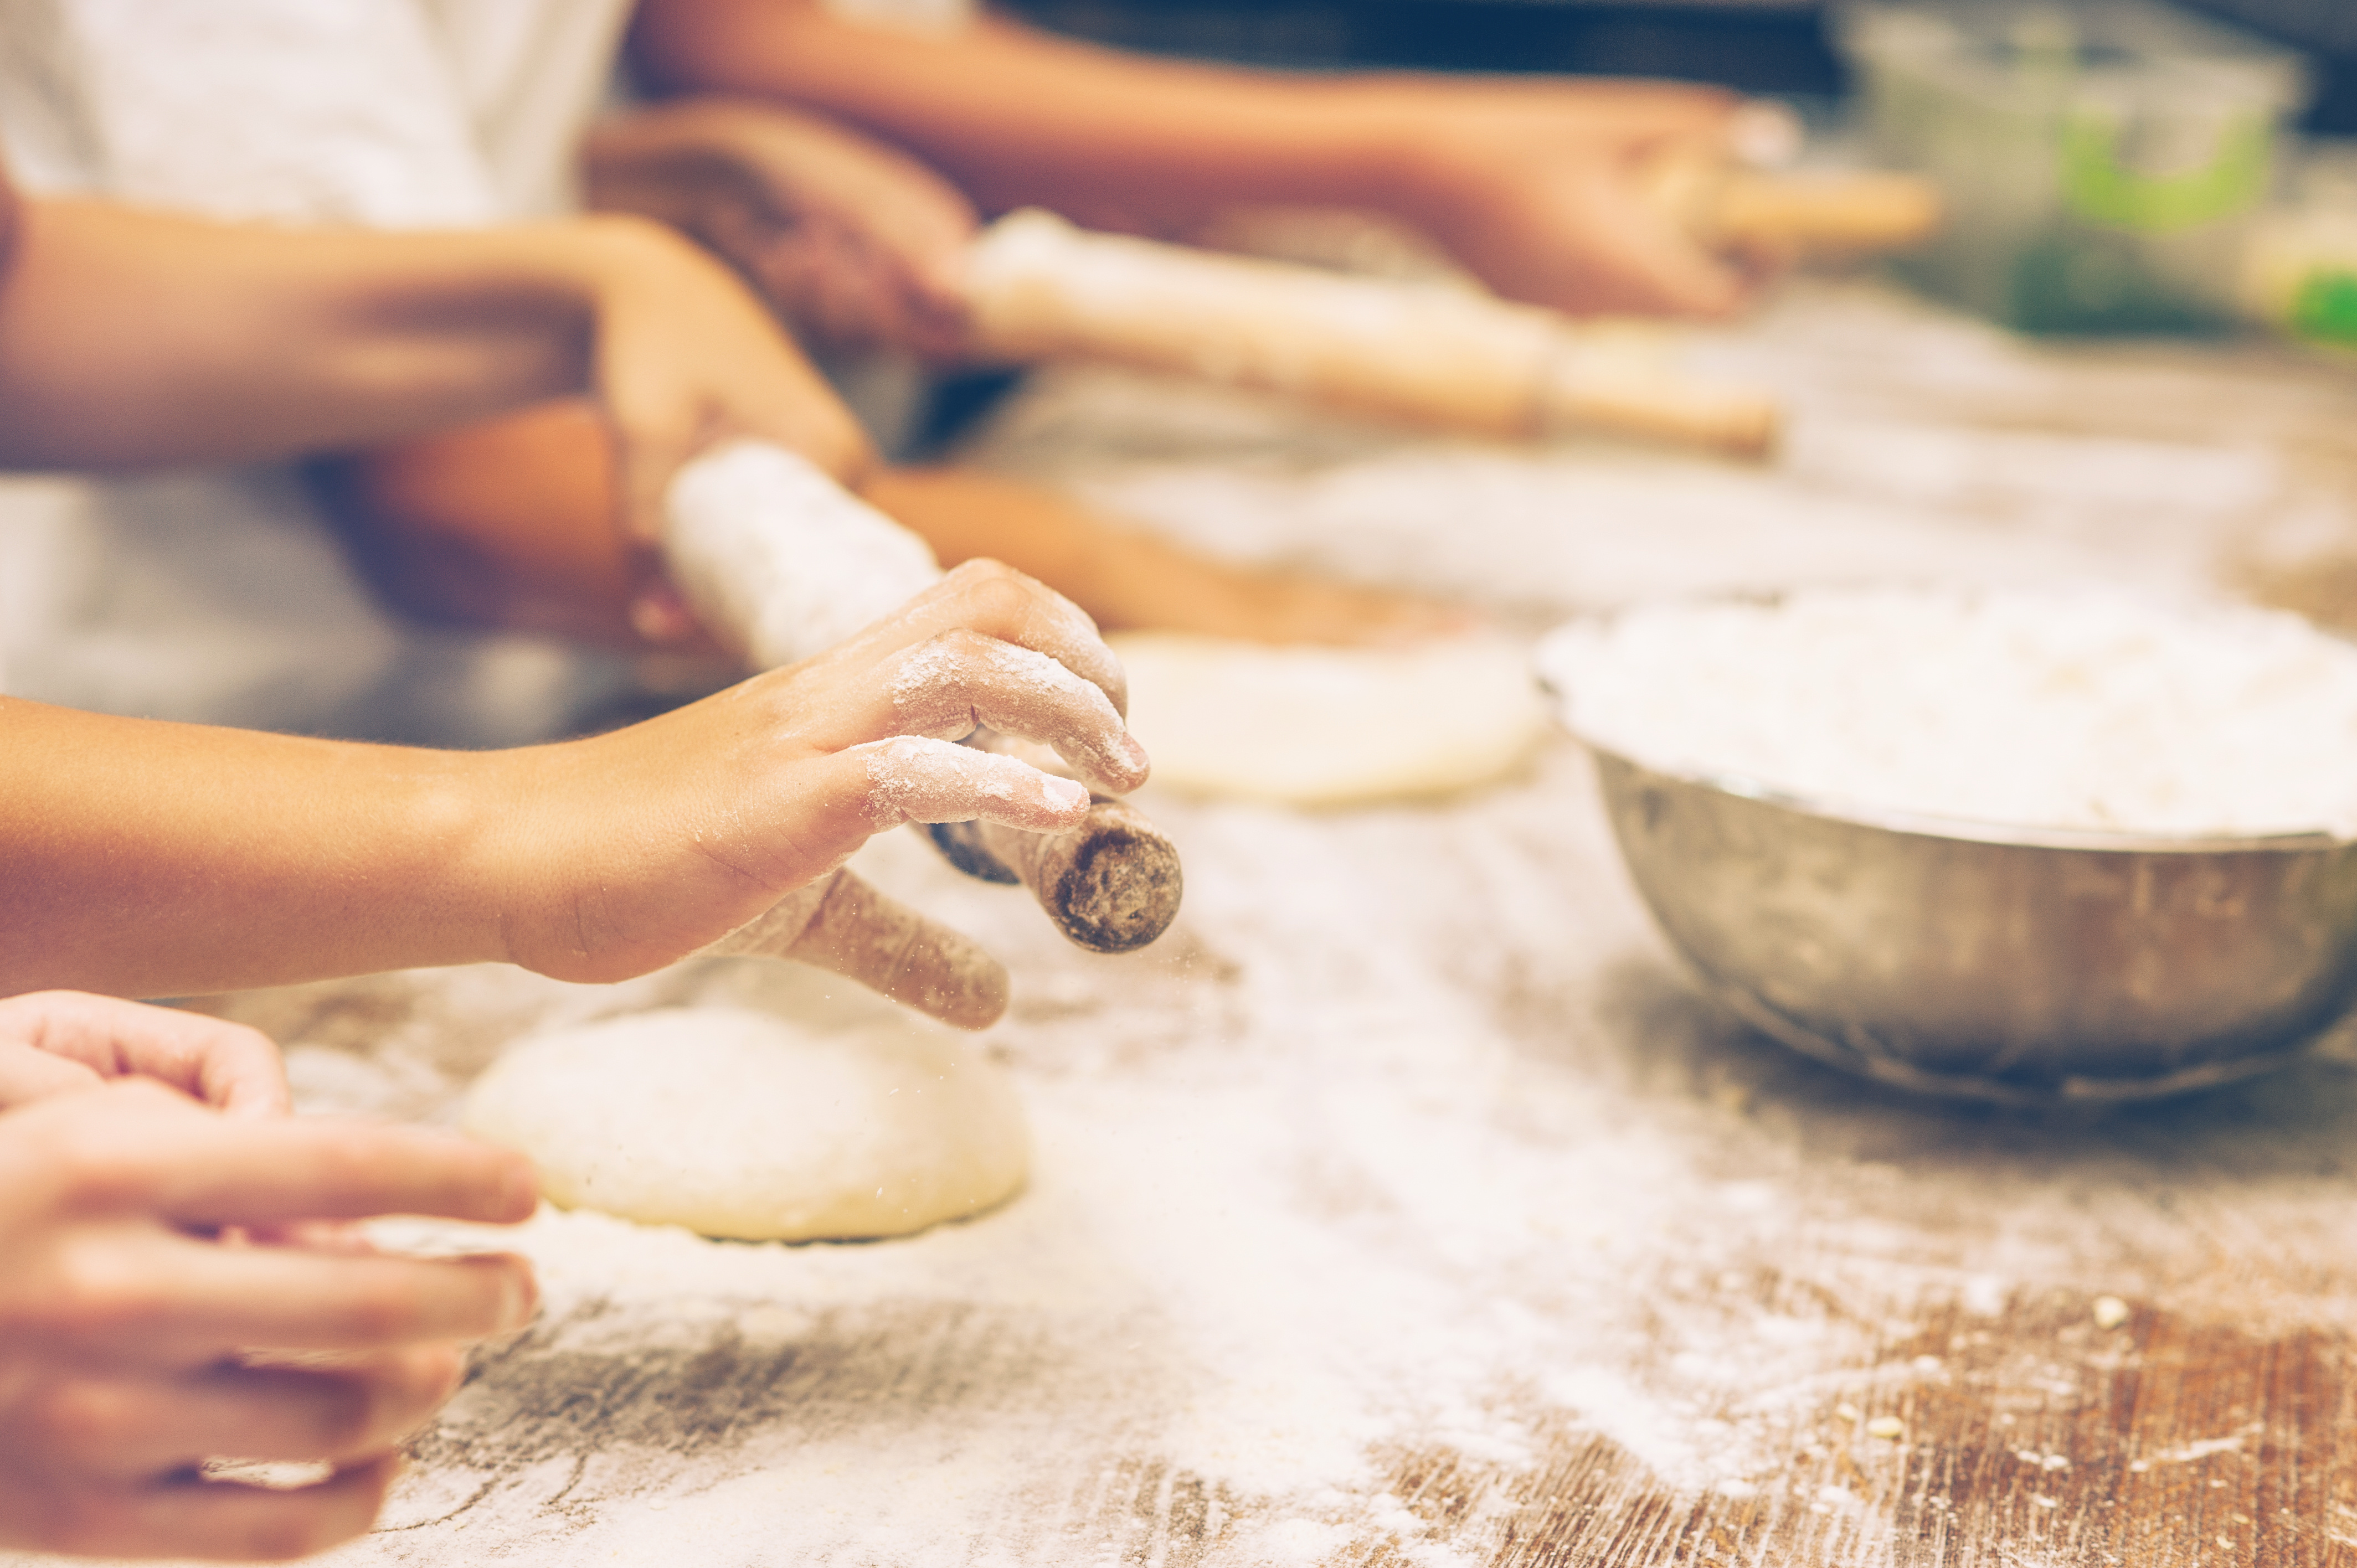 hands preparing dough